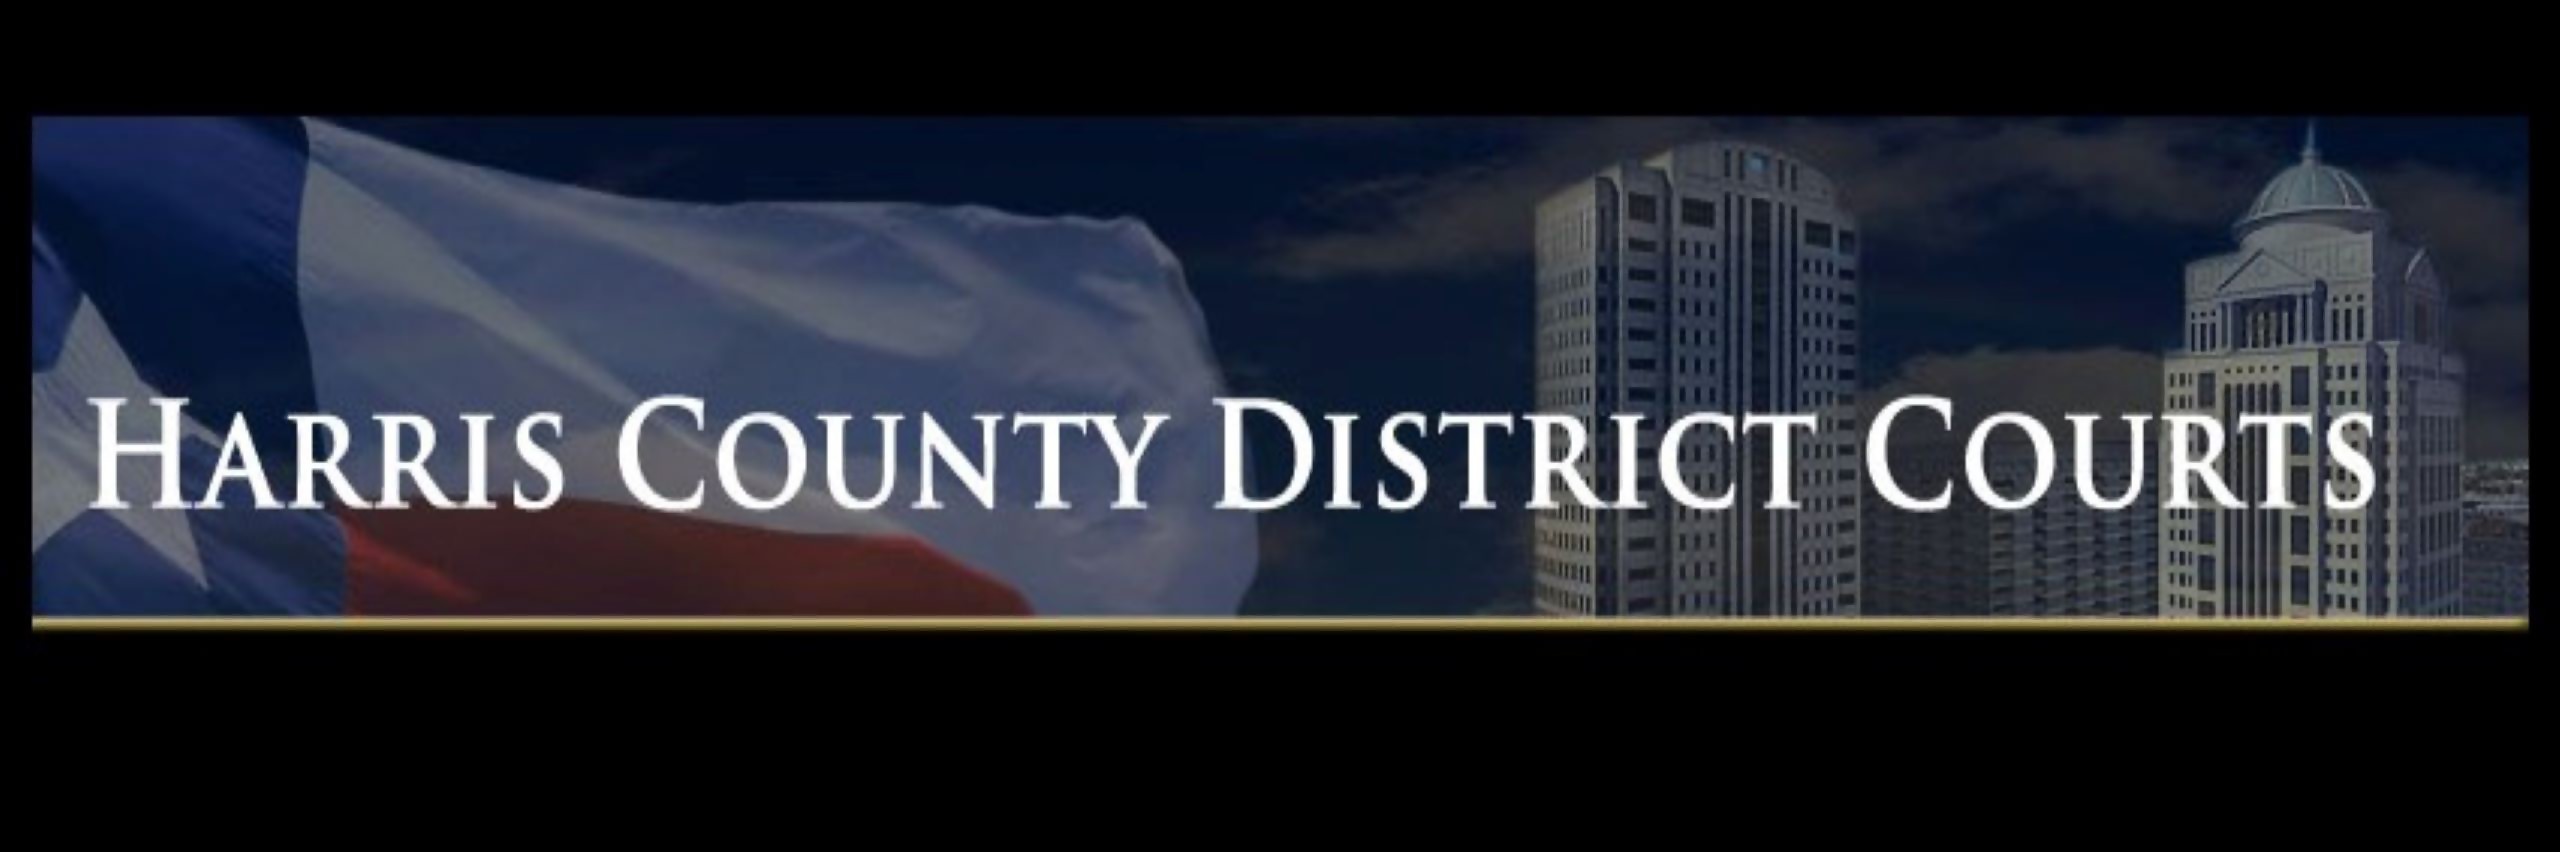 152nd District Court - Live Stream